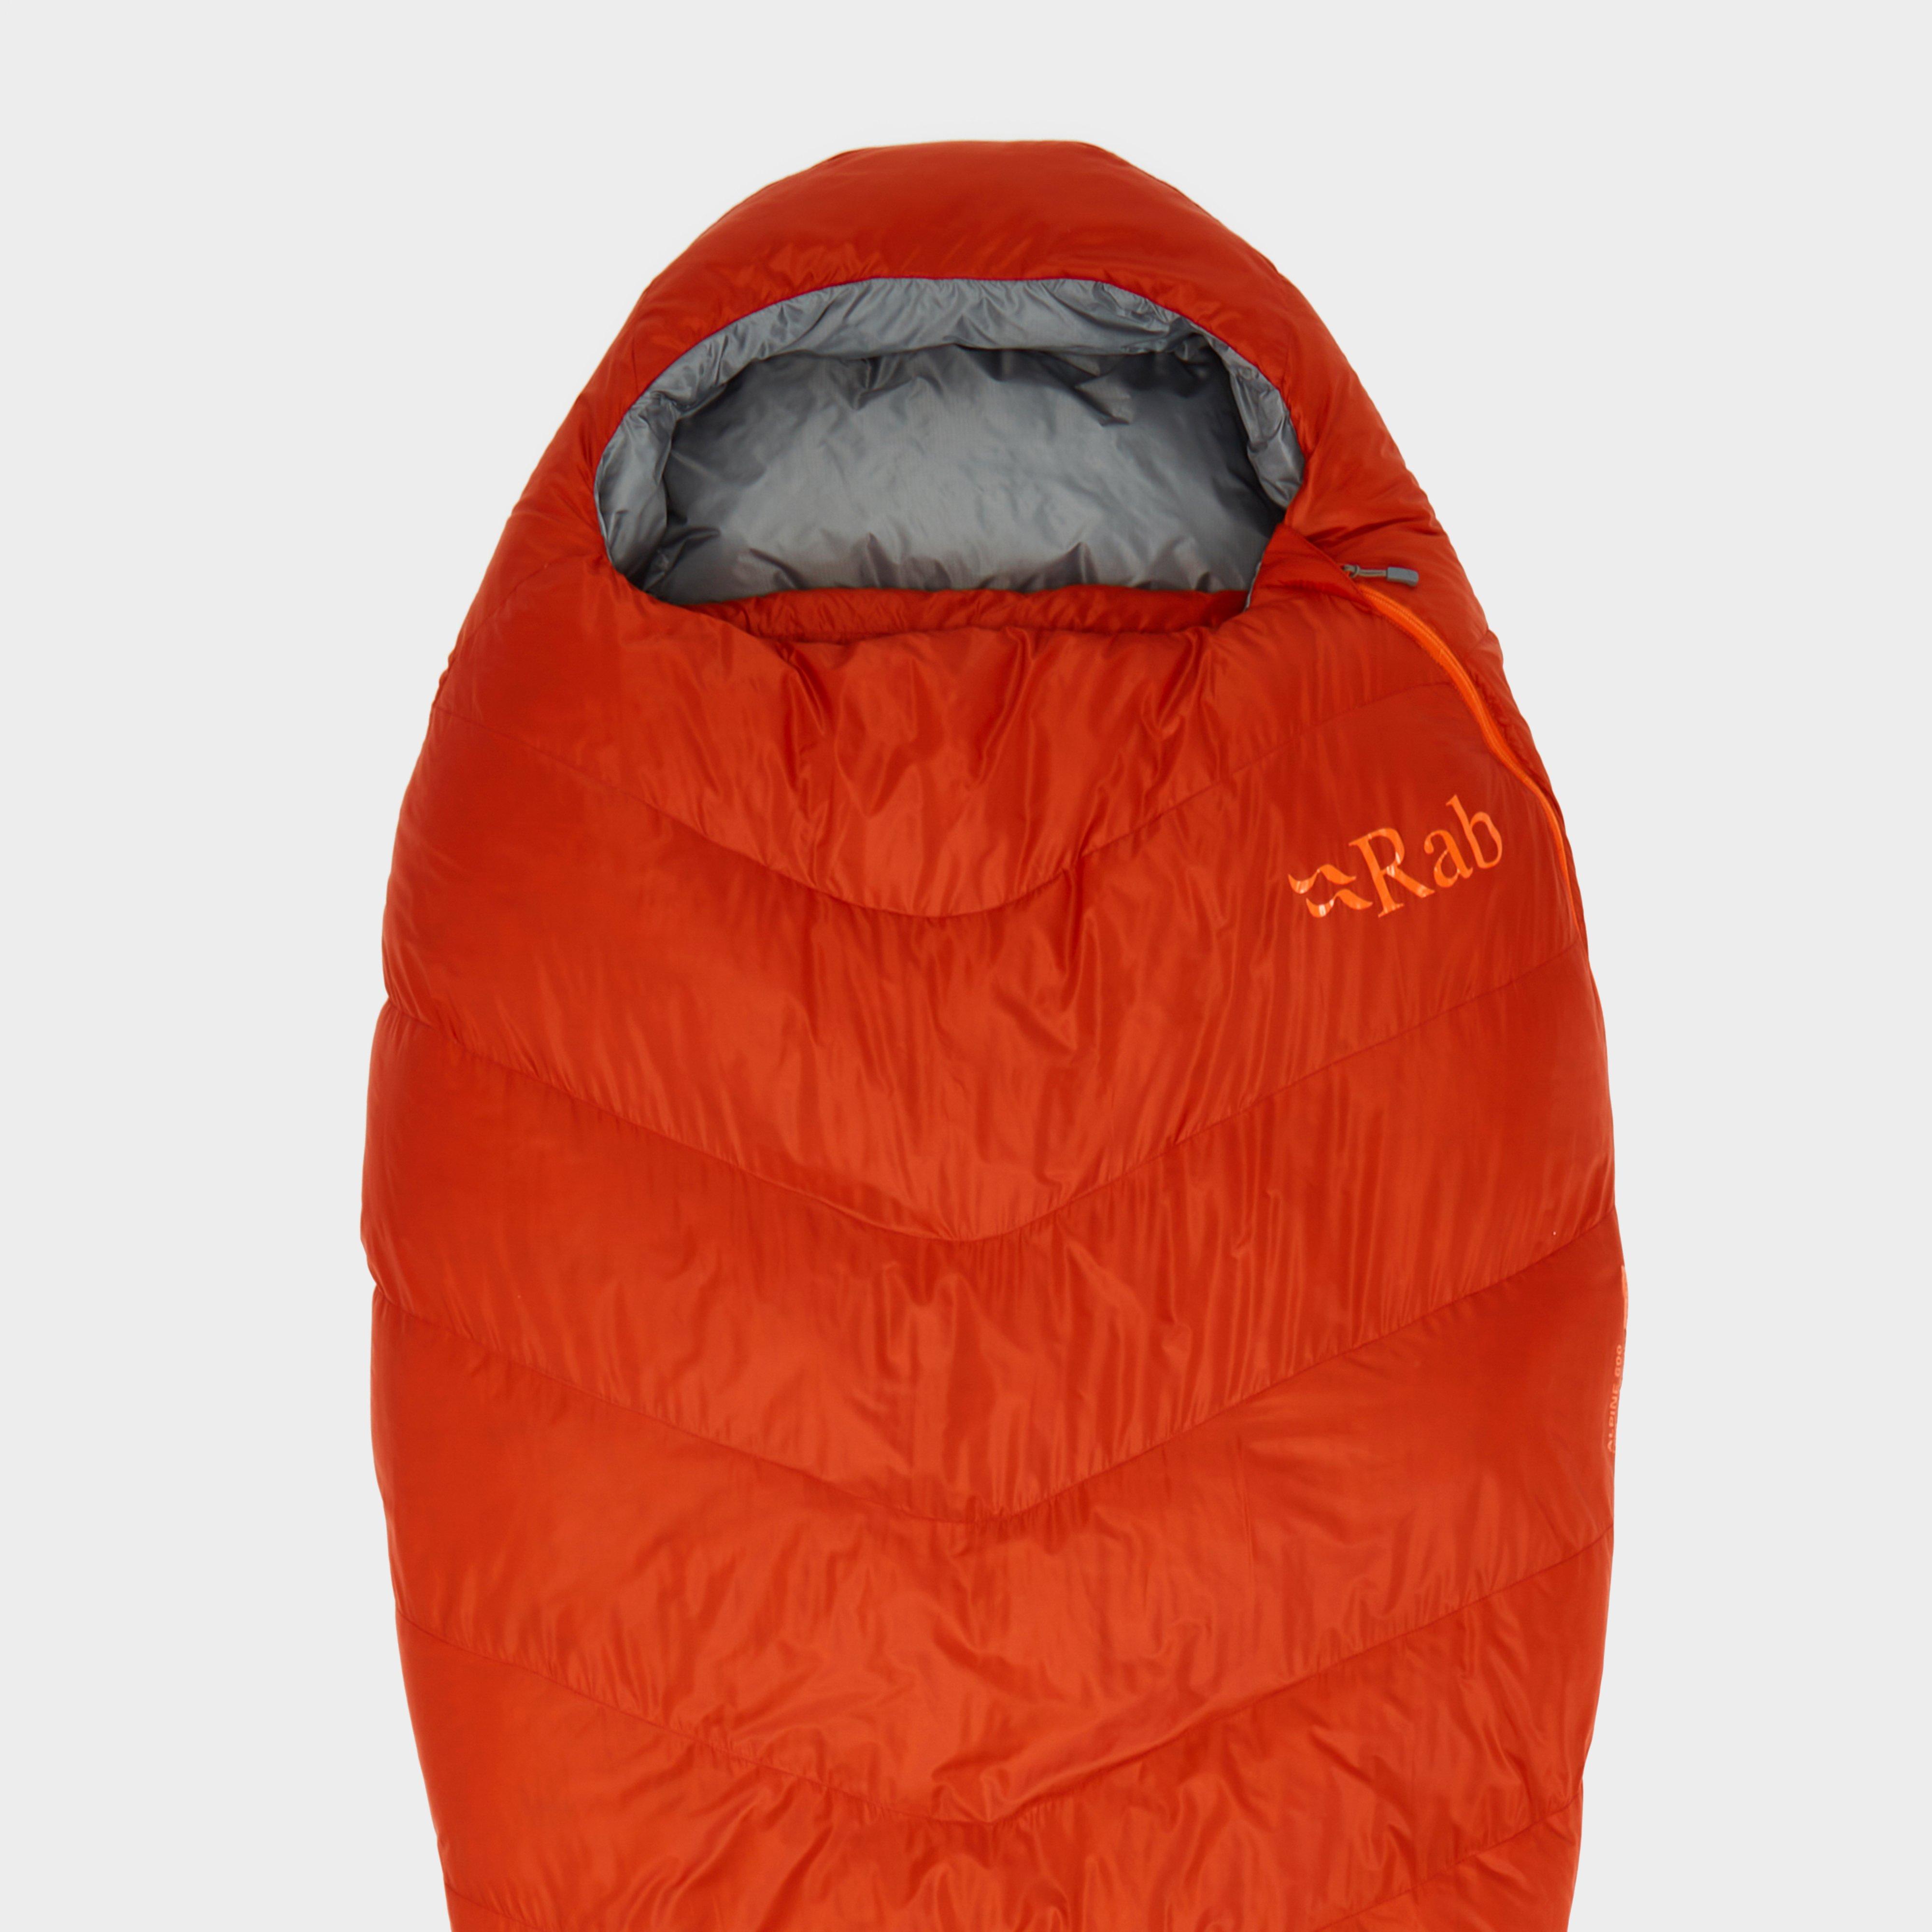 Rab Rab Alpine 600 Down Sleeping Bag - Cly, CLY